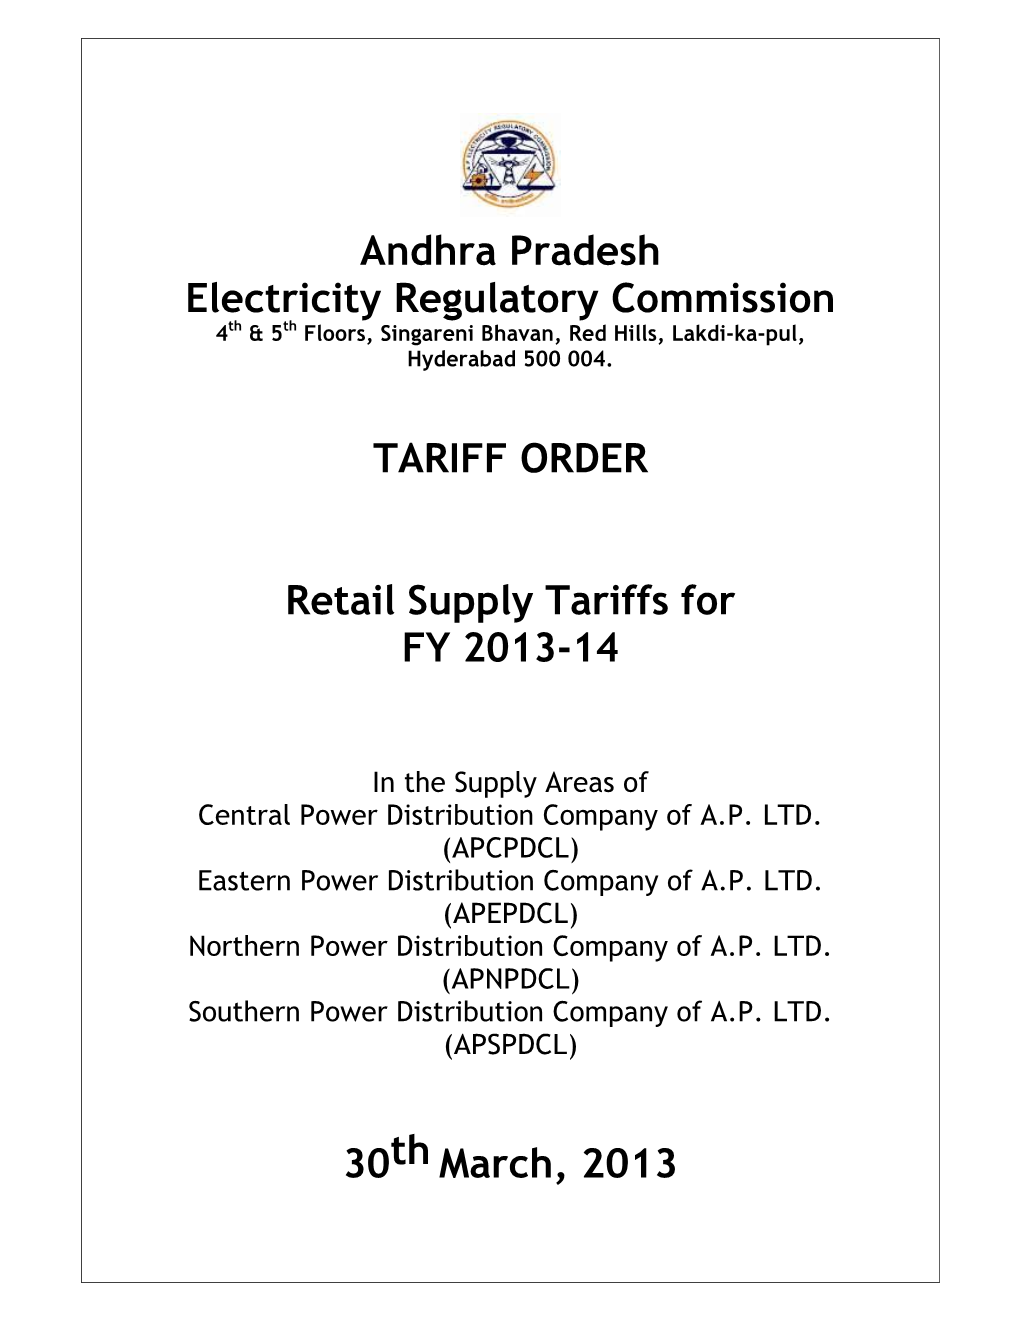 Andhra Pradesh Electricity Regulatory Commission TARIFF ORDER